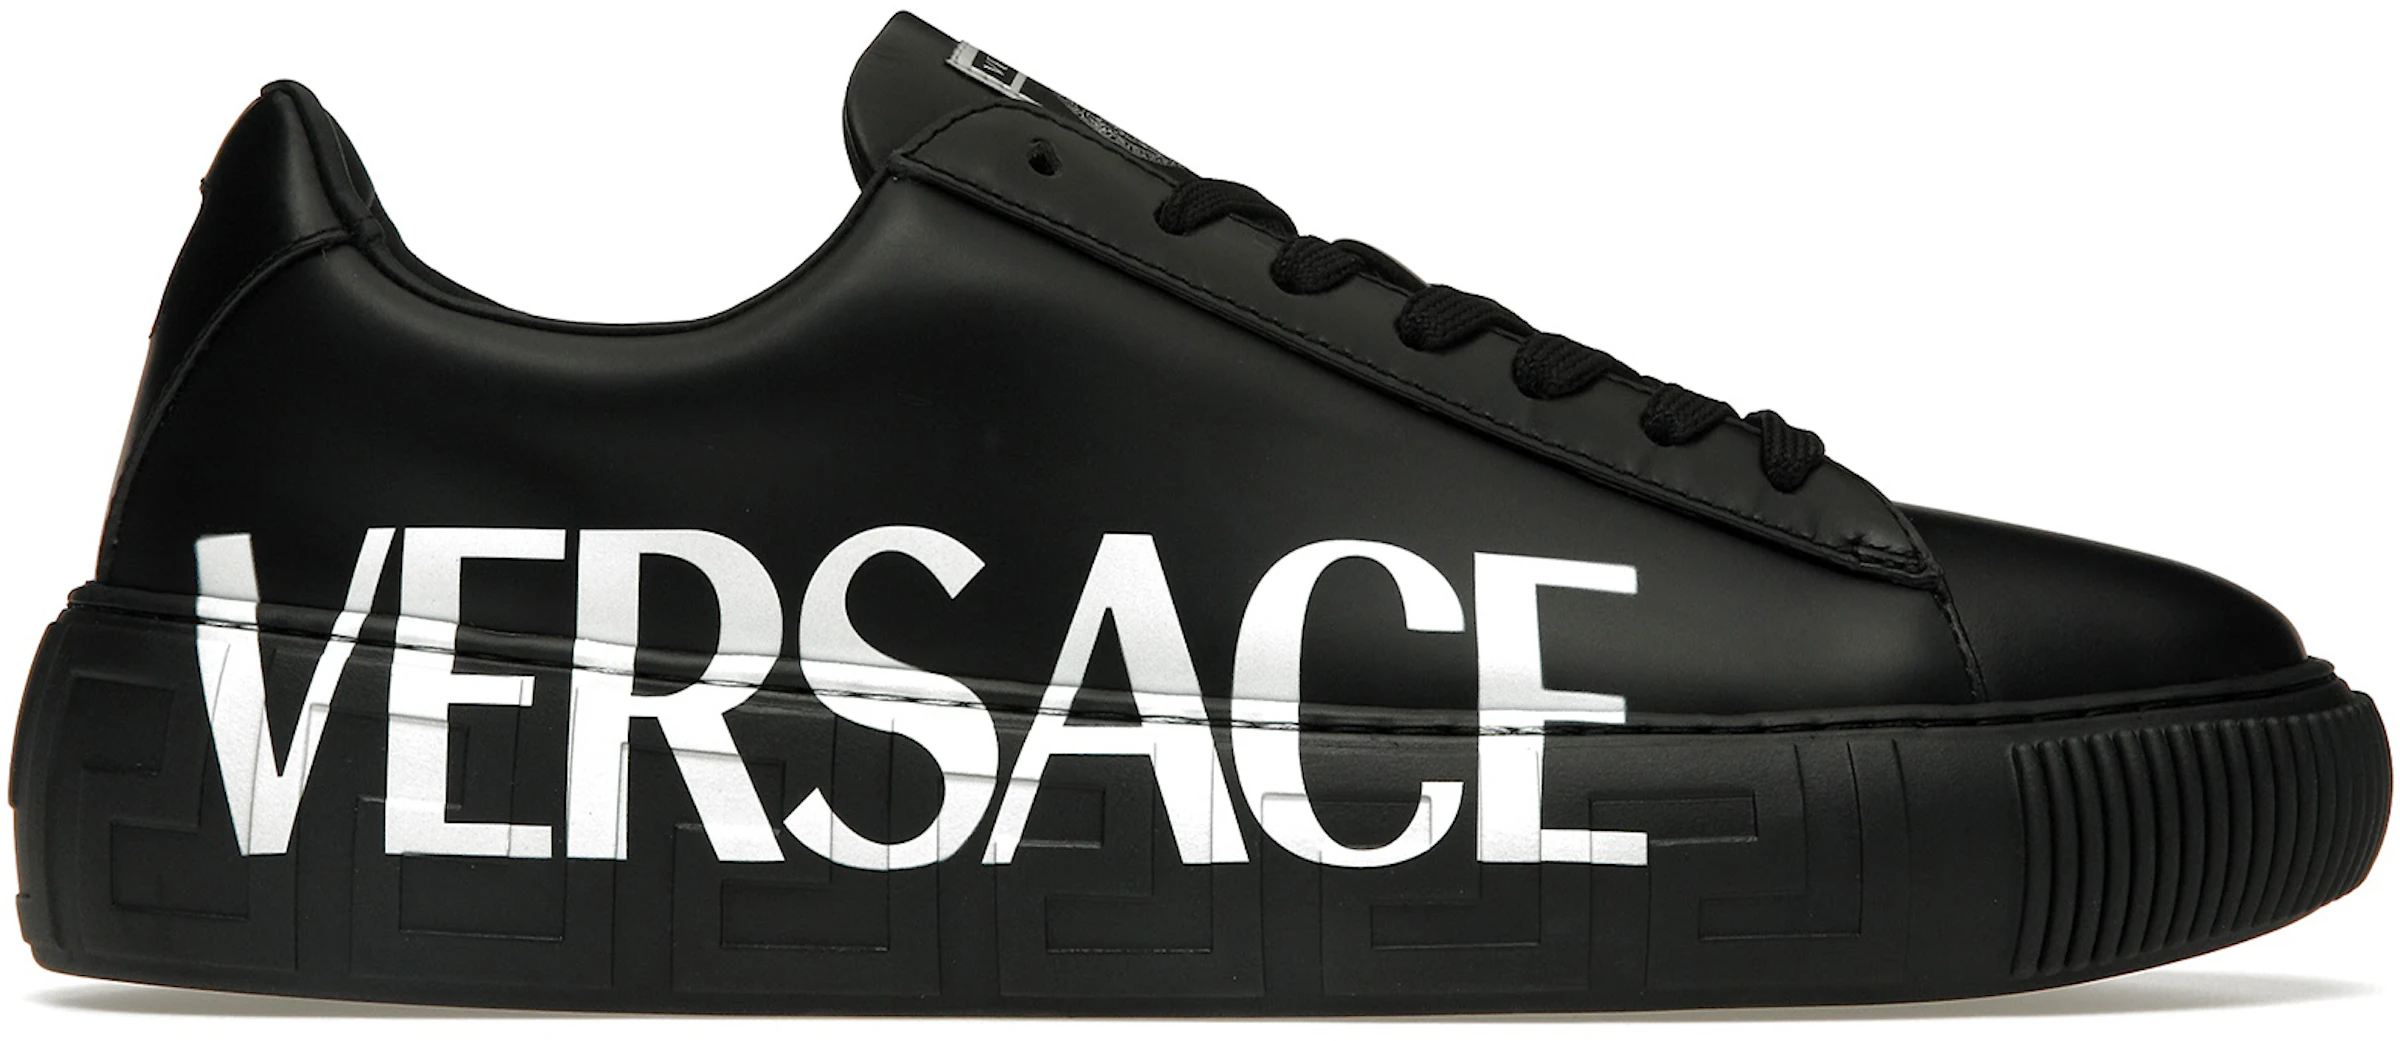 Introducir 94+ imagen versace mens shoes sneakers - Abzlocal.mx